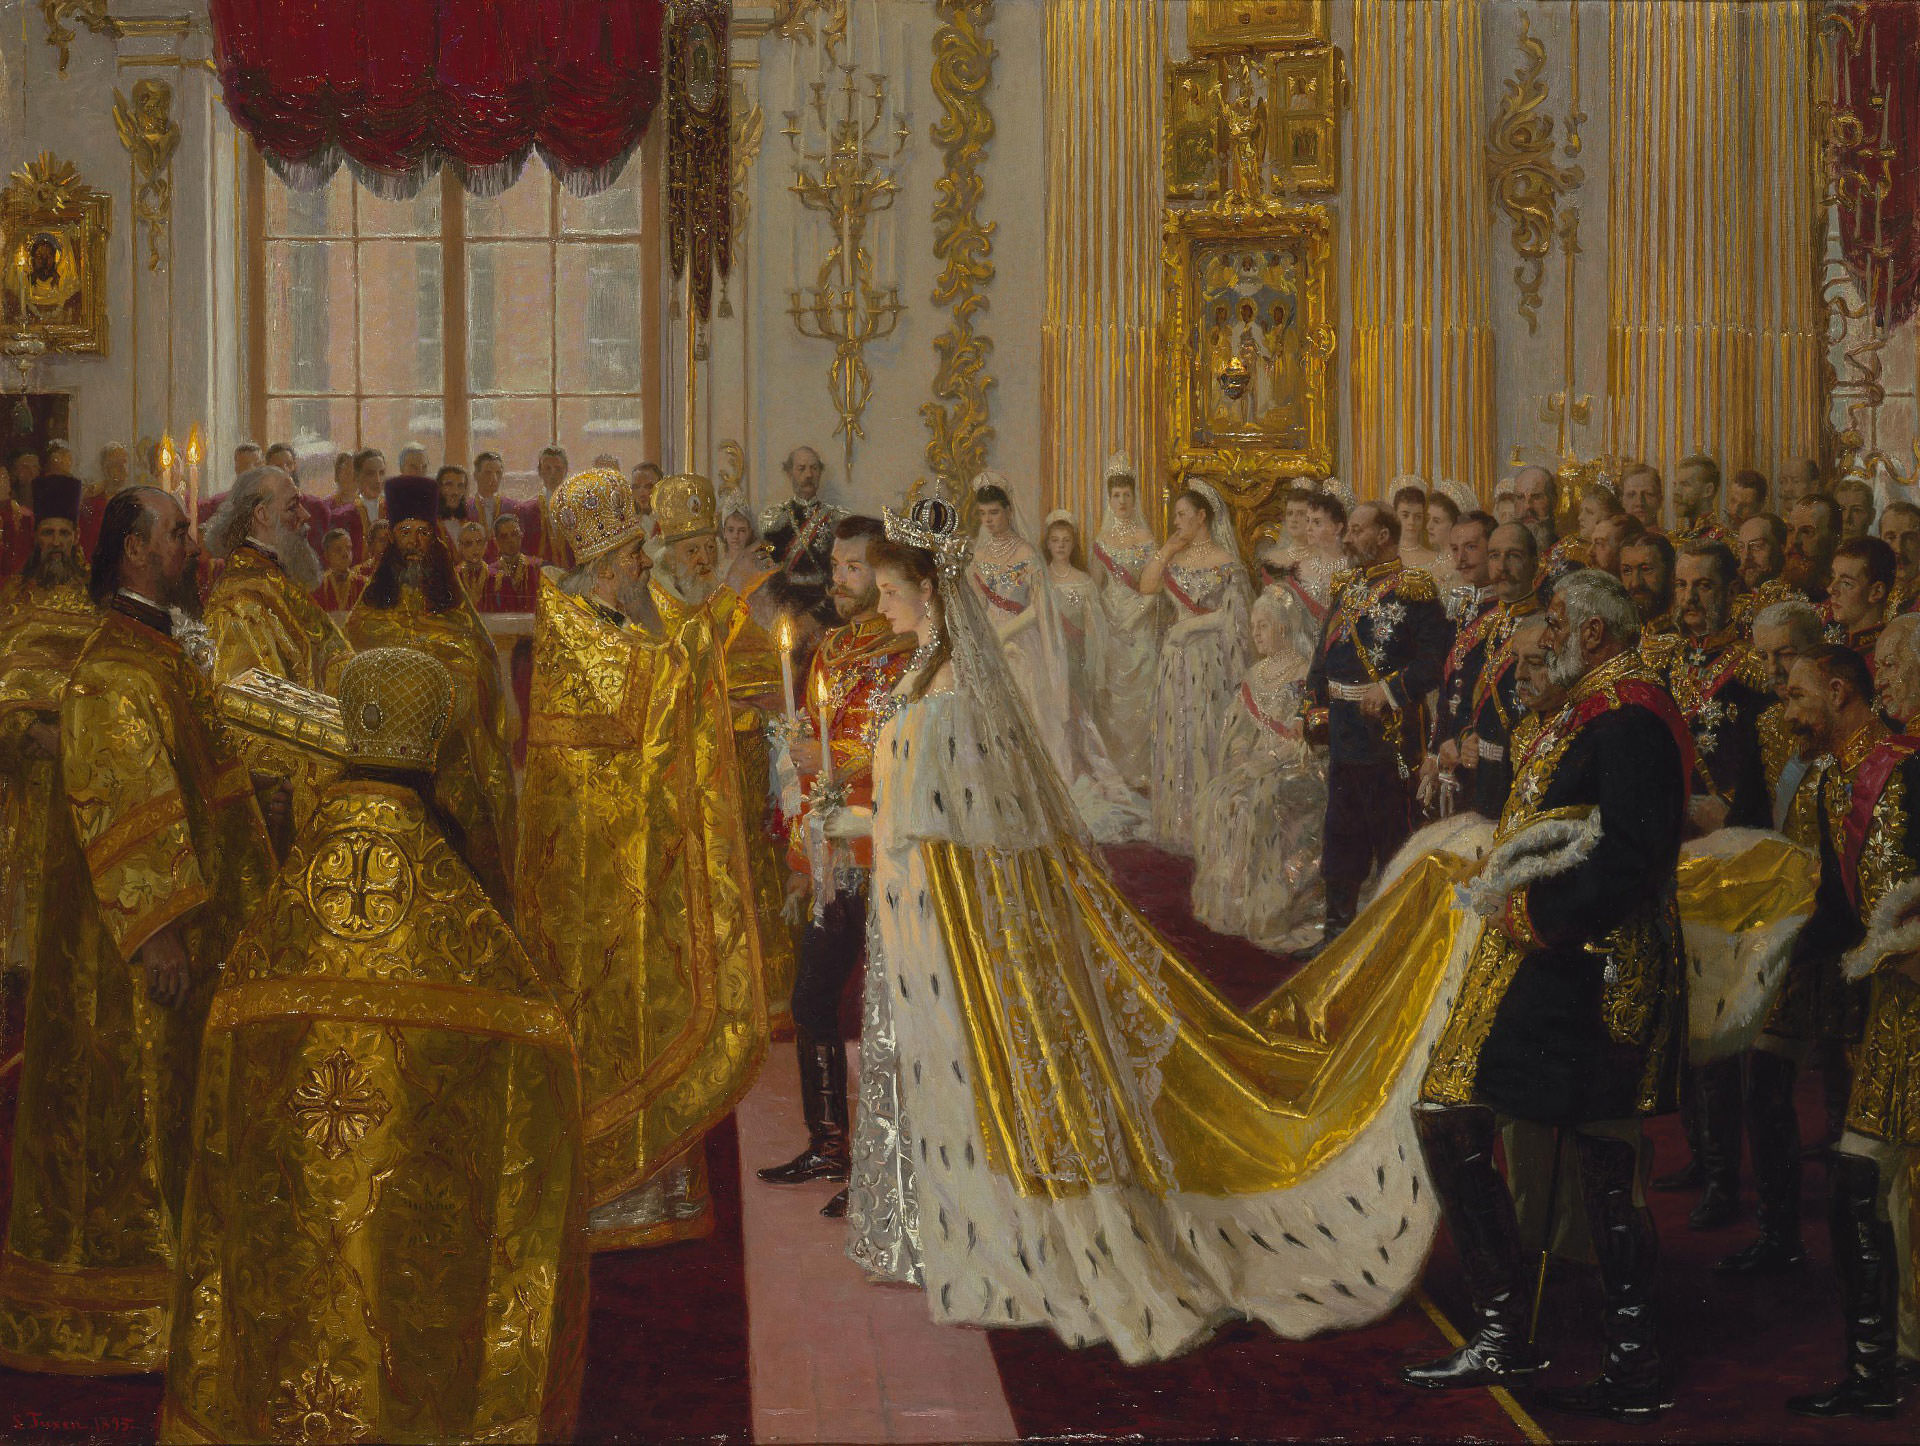 The Marriage of Nicholas II, Tsar of Russia, 26th November 1894